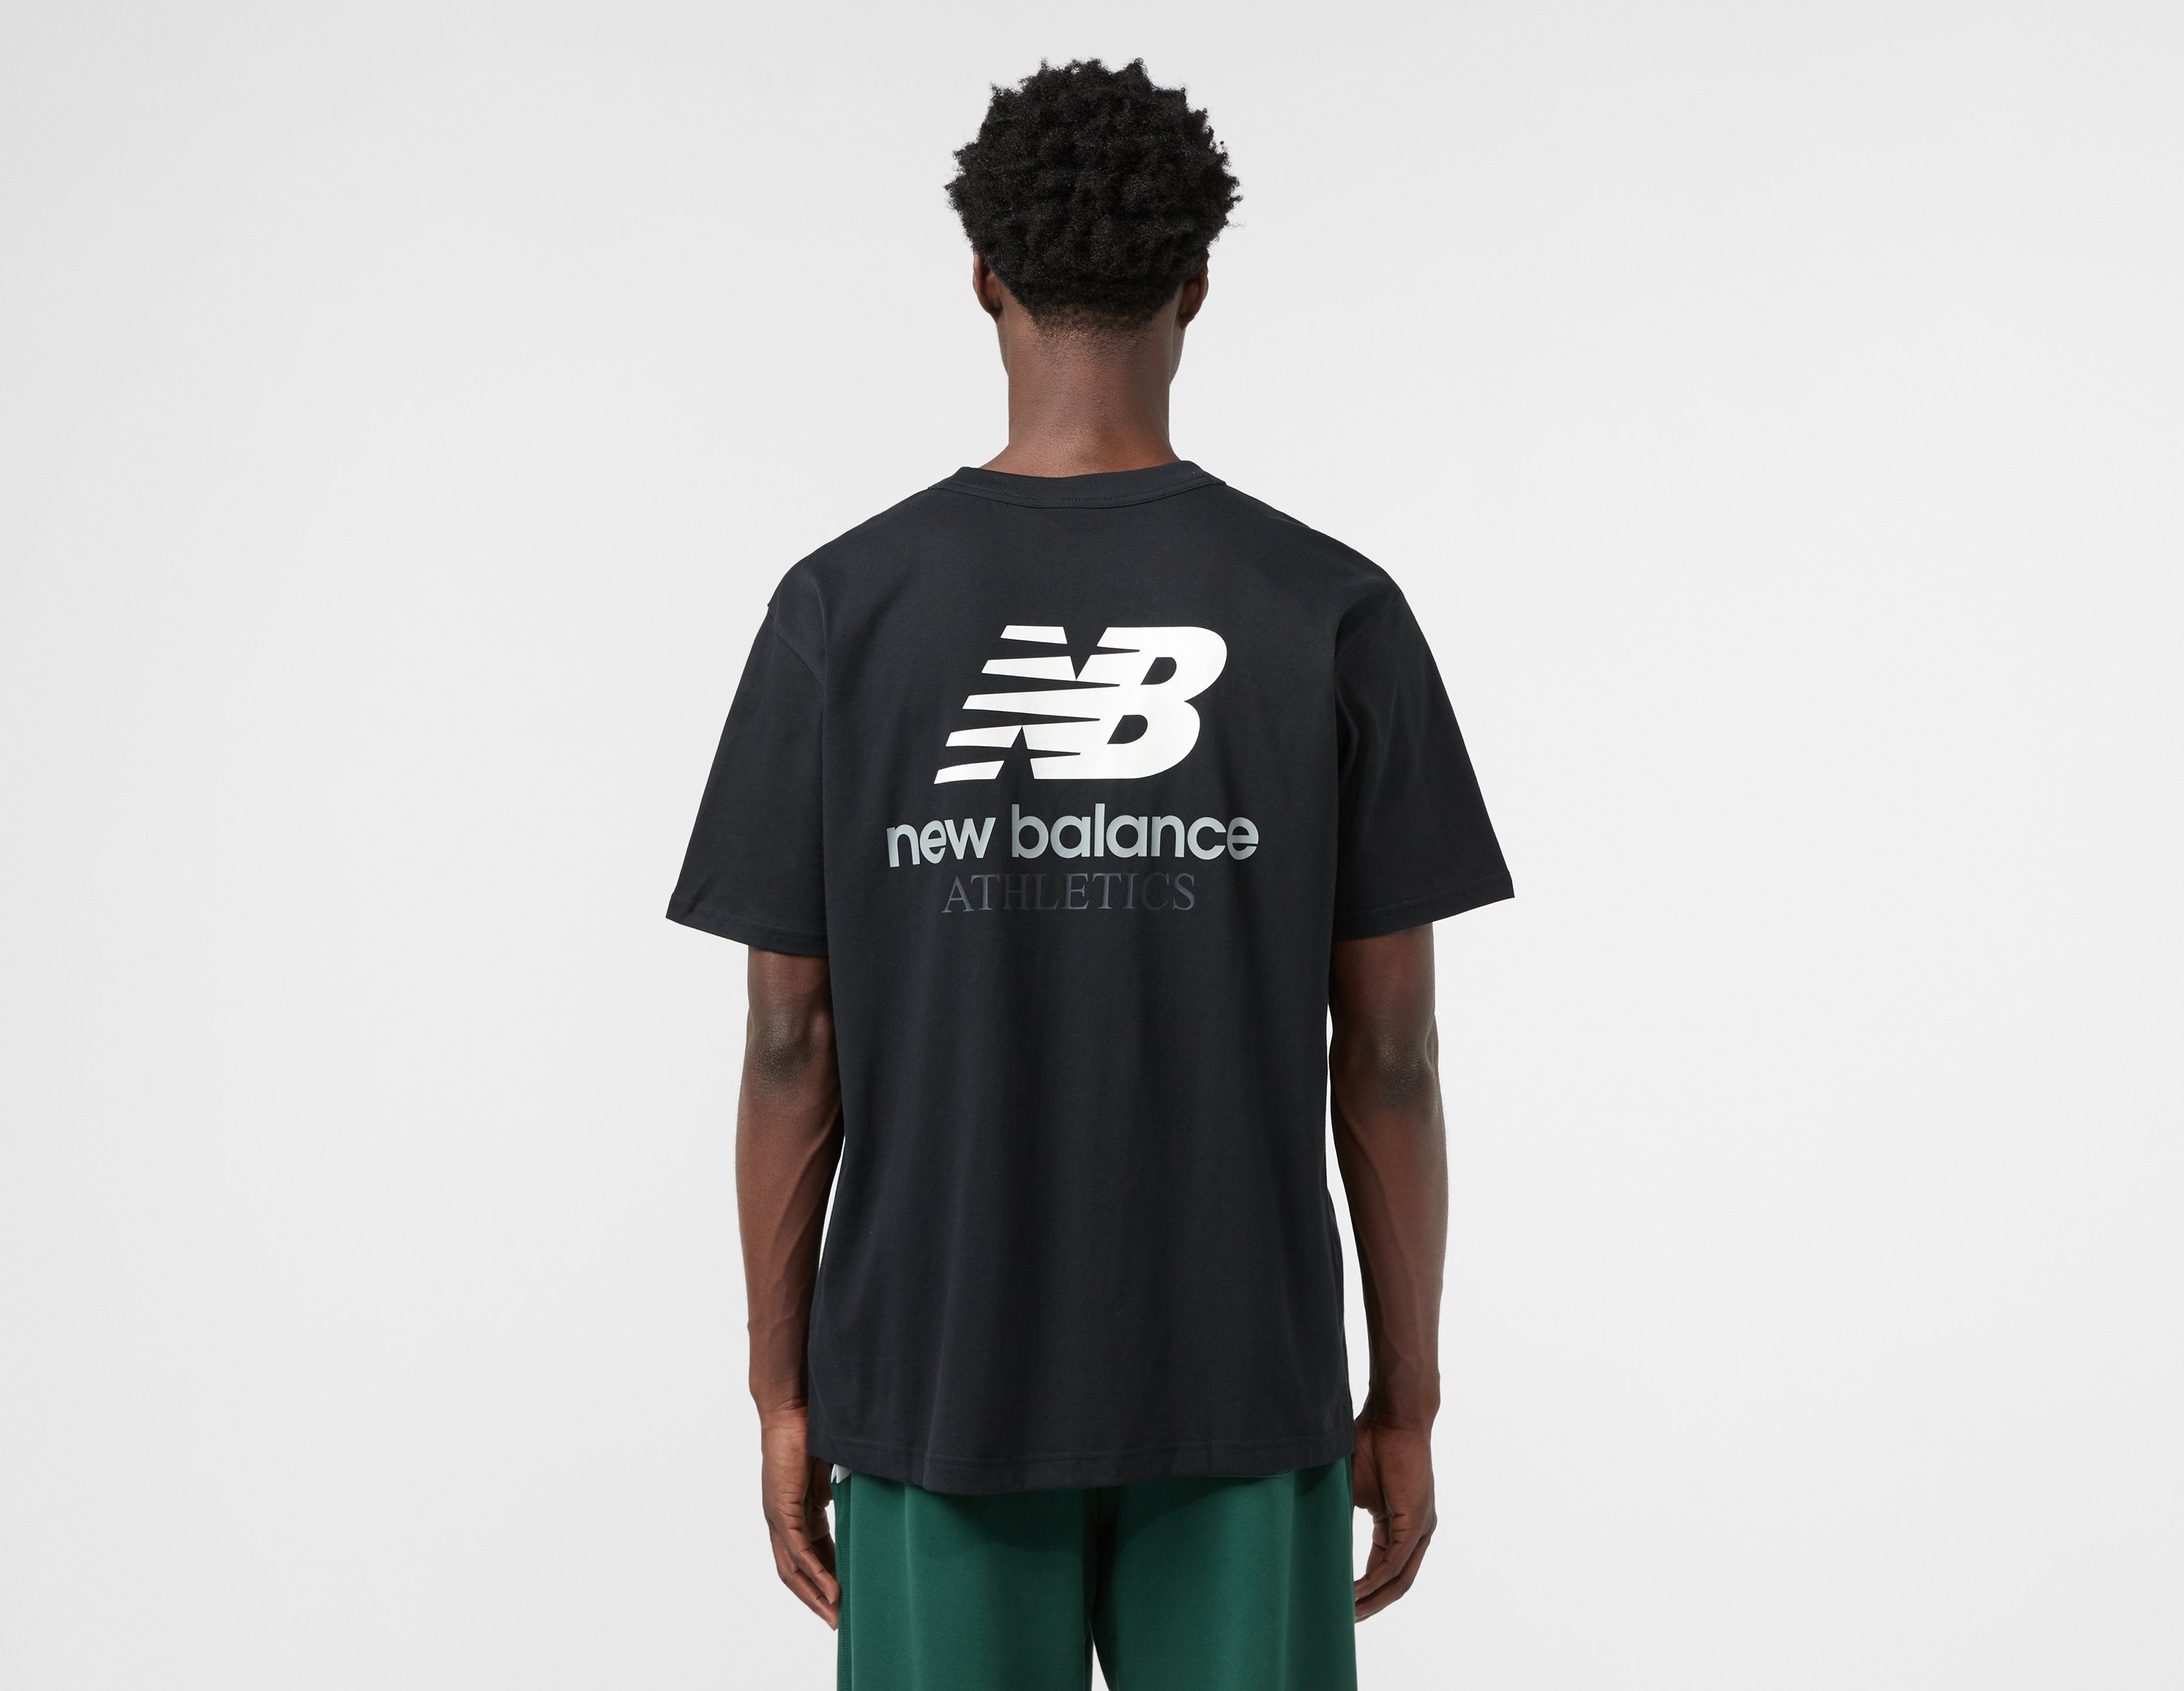 new balance athletics remastered t-shirt, black